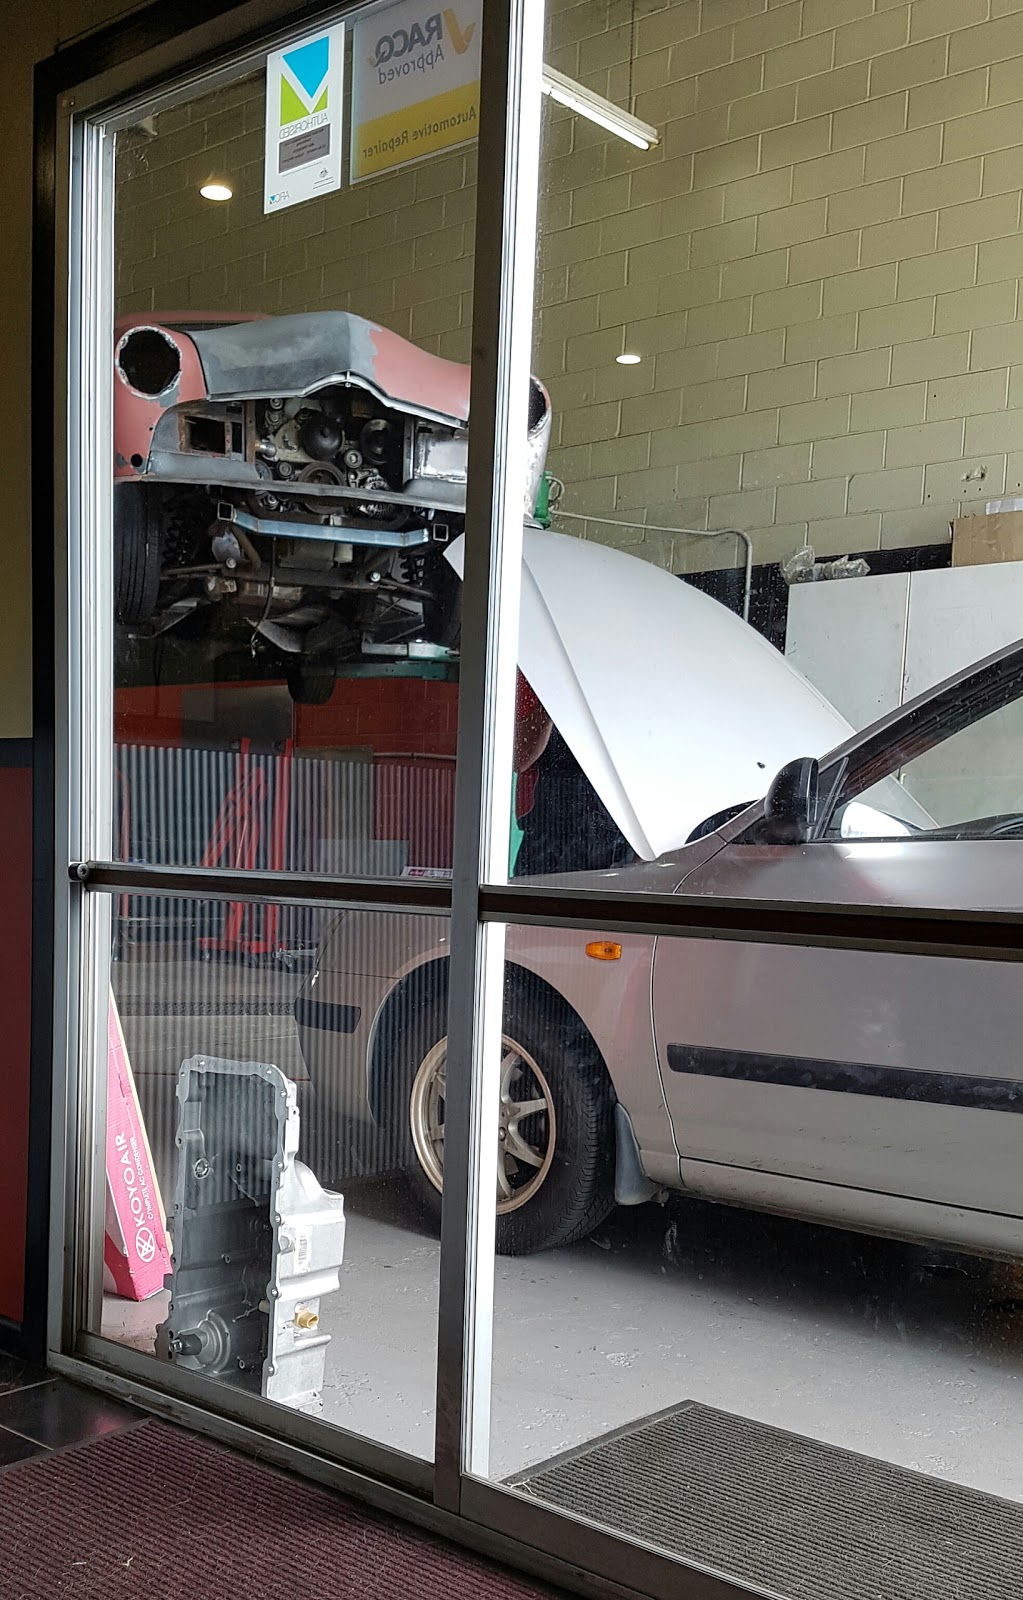 Red Devil Radiators and Air Conditi | car repair | 666 Gympie Rd, Lawnton QLD 4501, Australia | 0732056155 OR +61 7 3205 6155